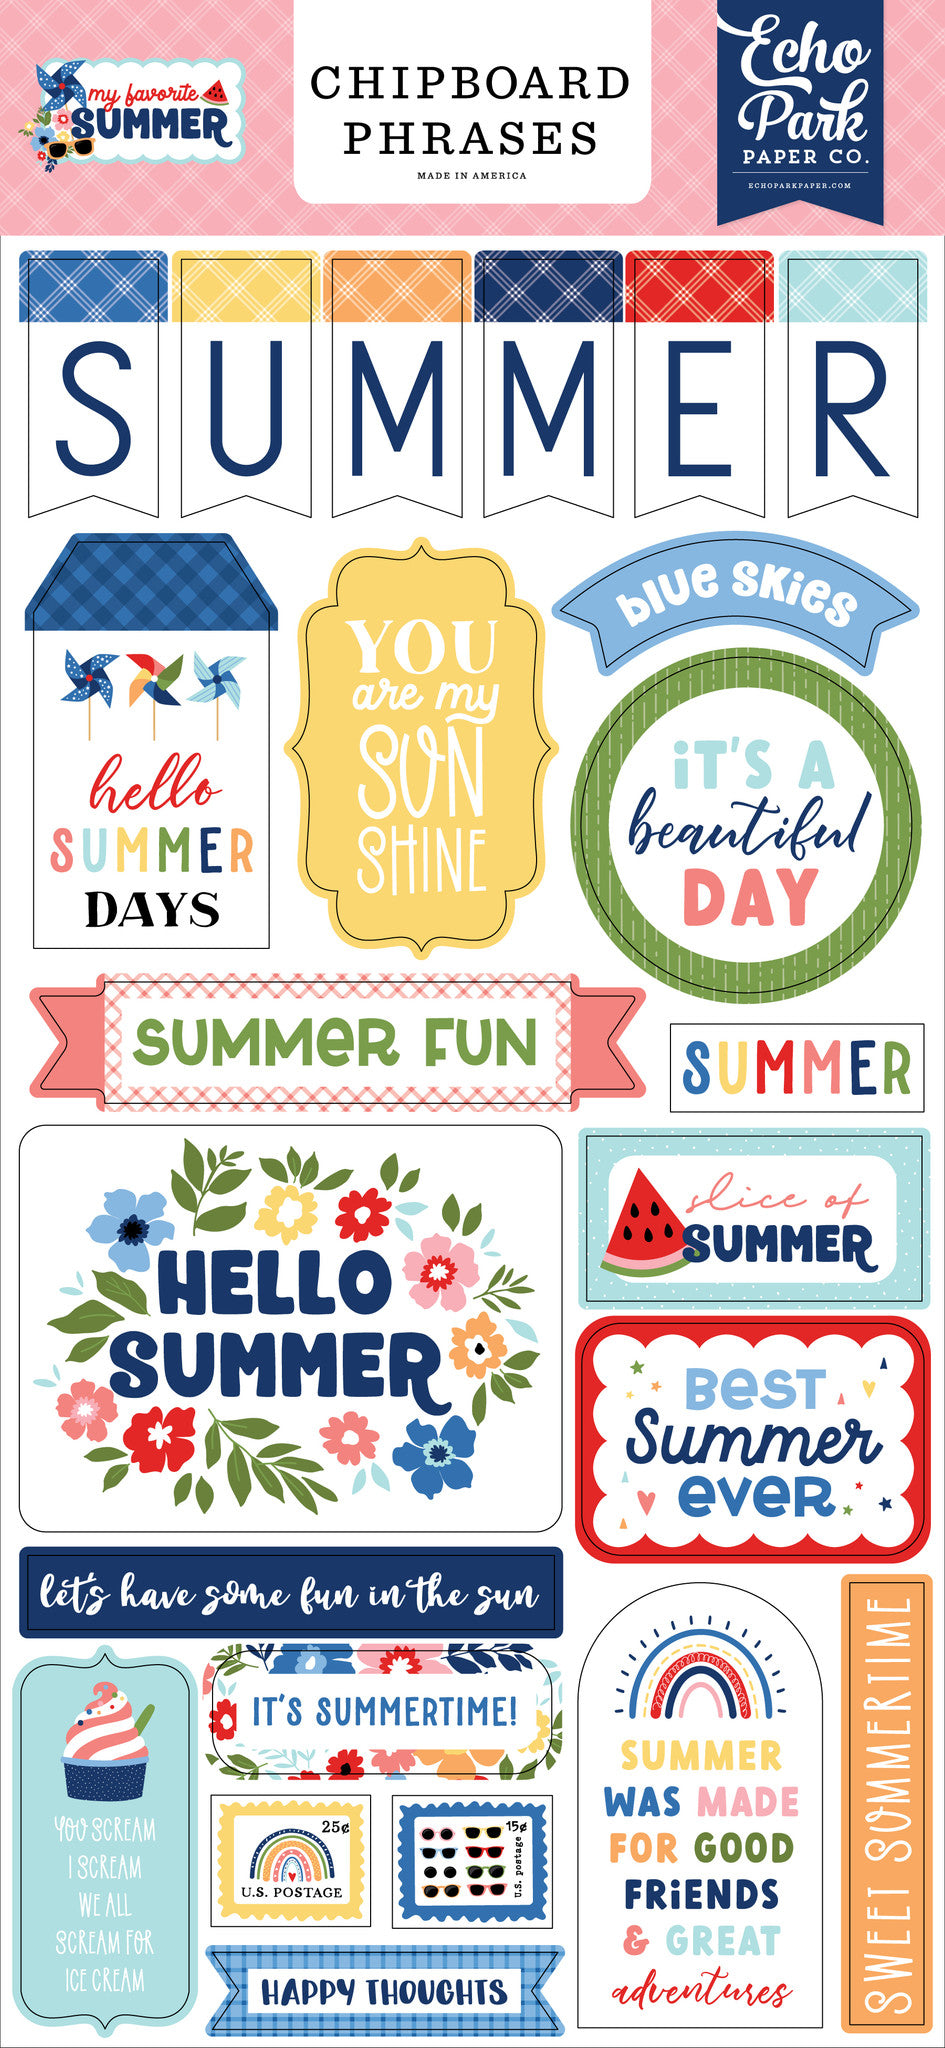 "My Favorite Summer" Chipboard Phrases